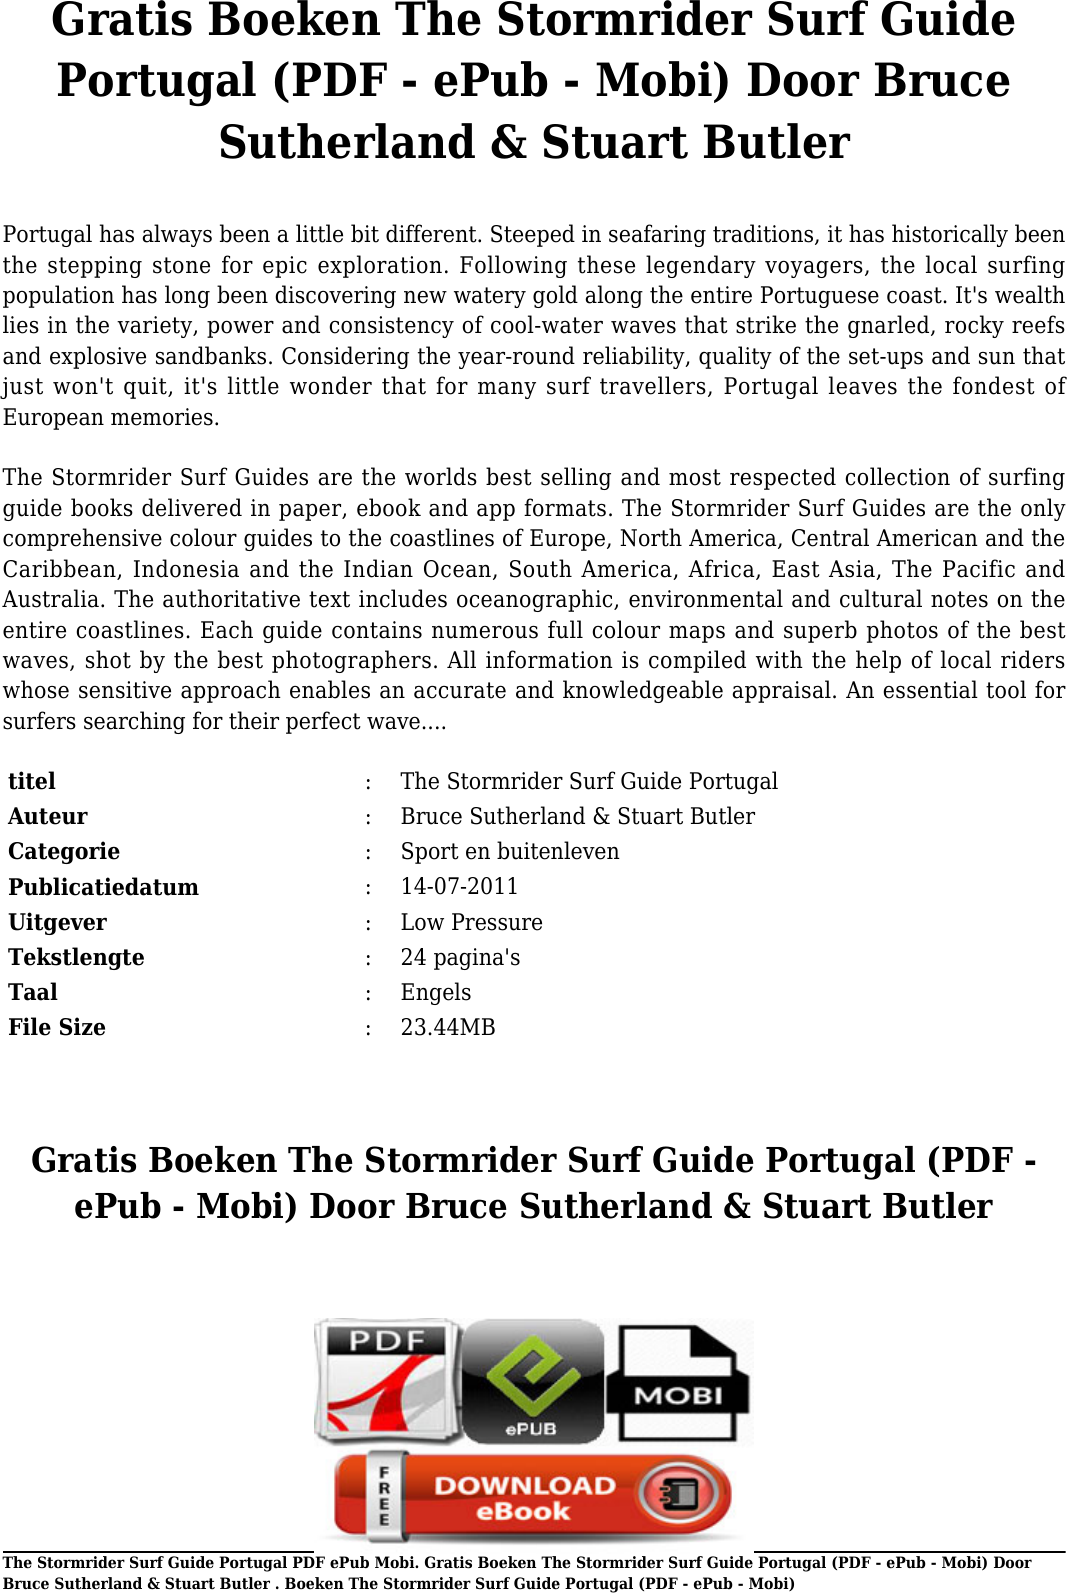 Page 2 of 11 - Gratis Boeken The Stormrider Surf Guide Portugal Van Bruce Sutherland & Stuart Butler(PDF - EPub Mobi) (PDF E Pub Door S